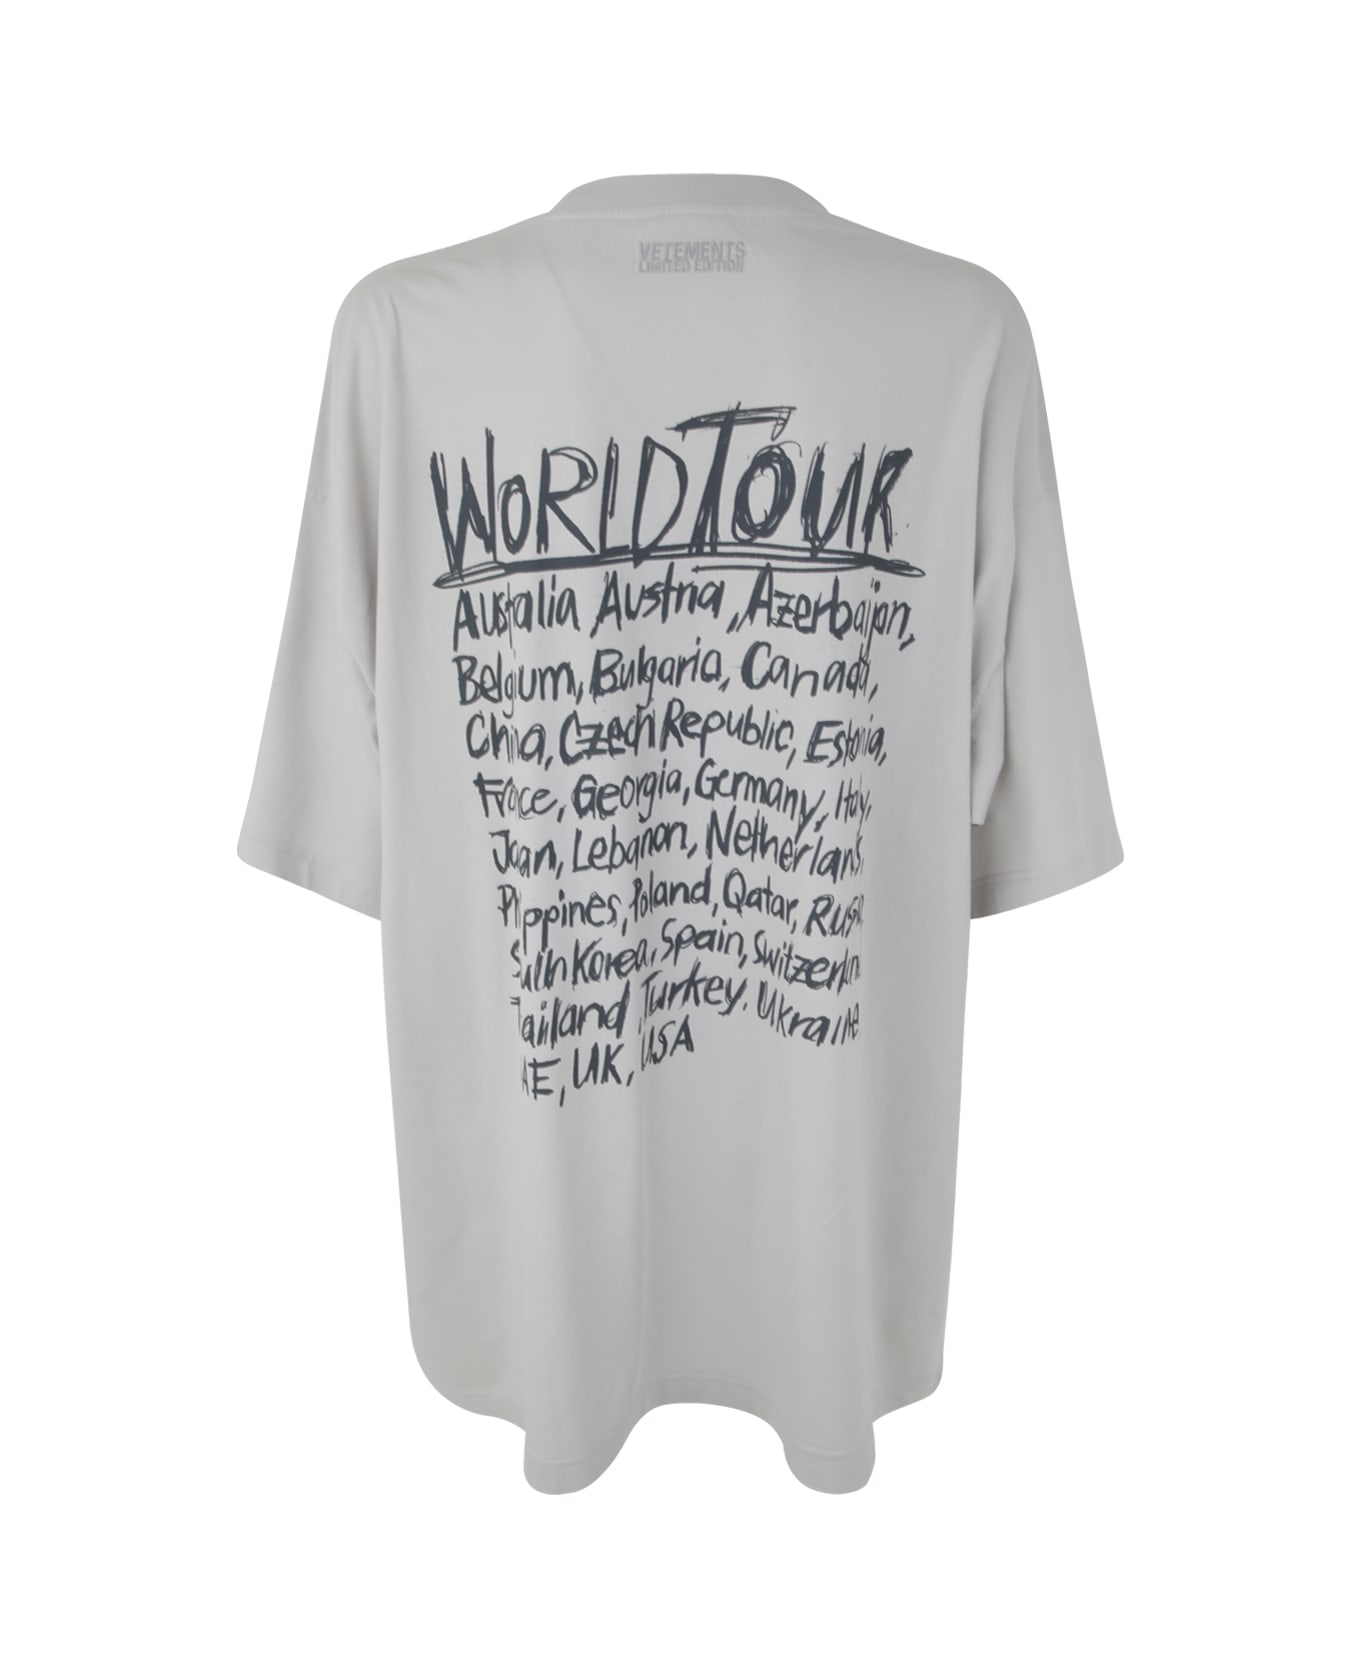 VETEMENTS Worldtour Logo T-shirt - Oyster Mushroom Tシャツ